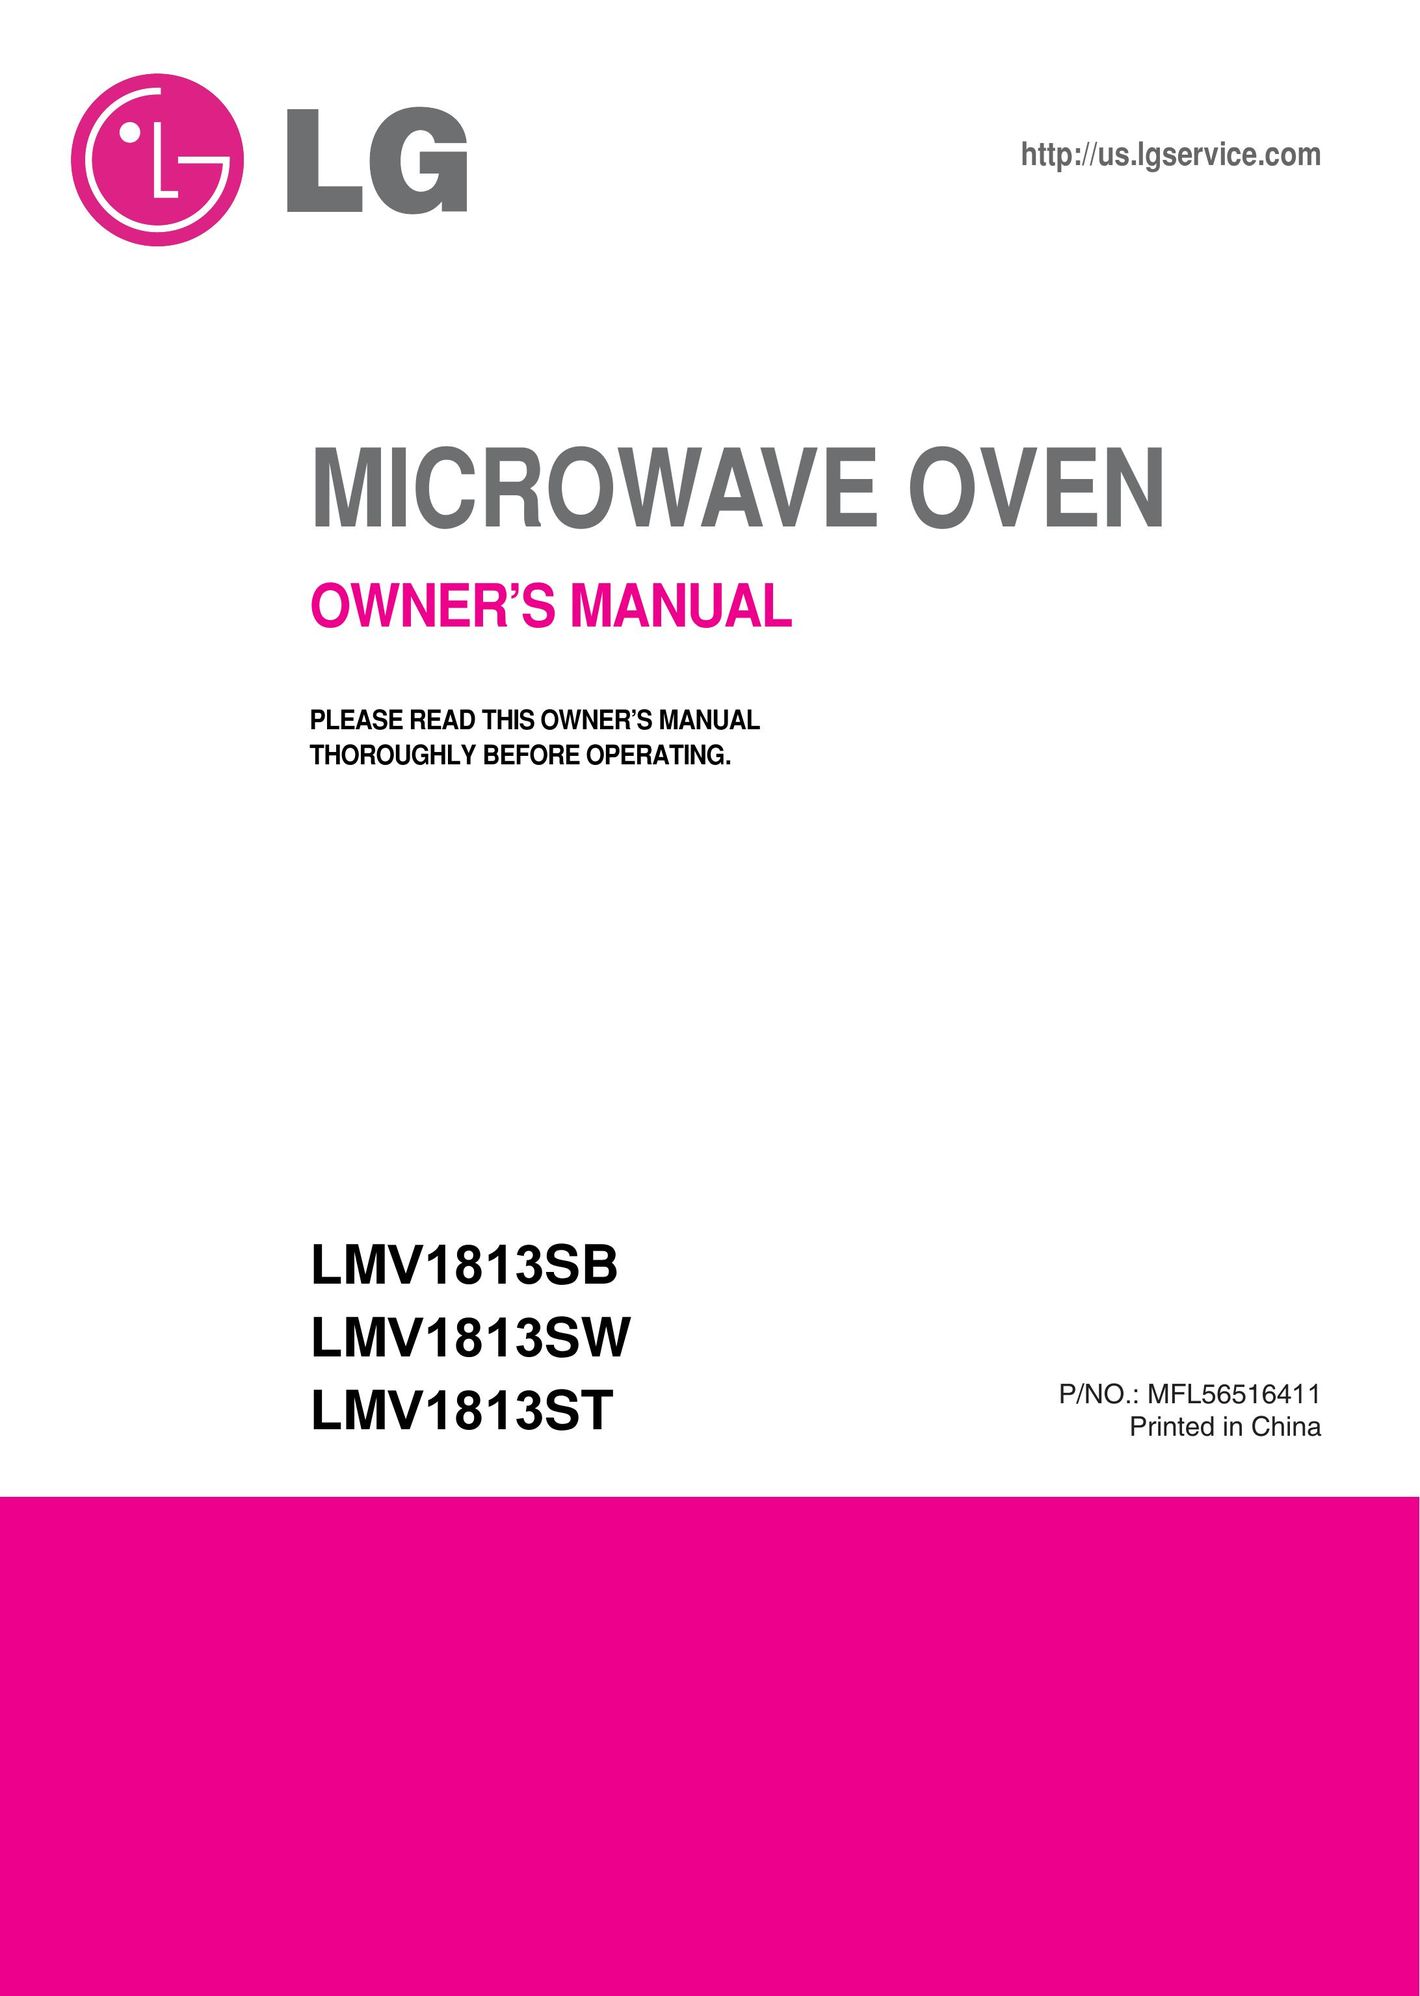 LG Electronics LMV1813ST Microwave Oven User Manual